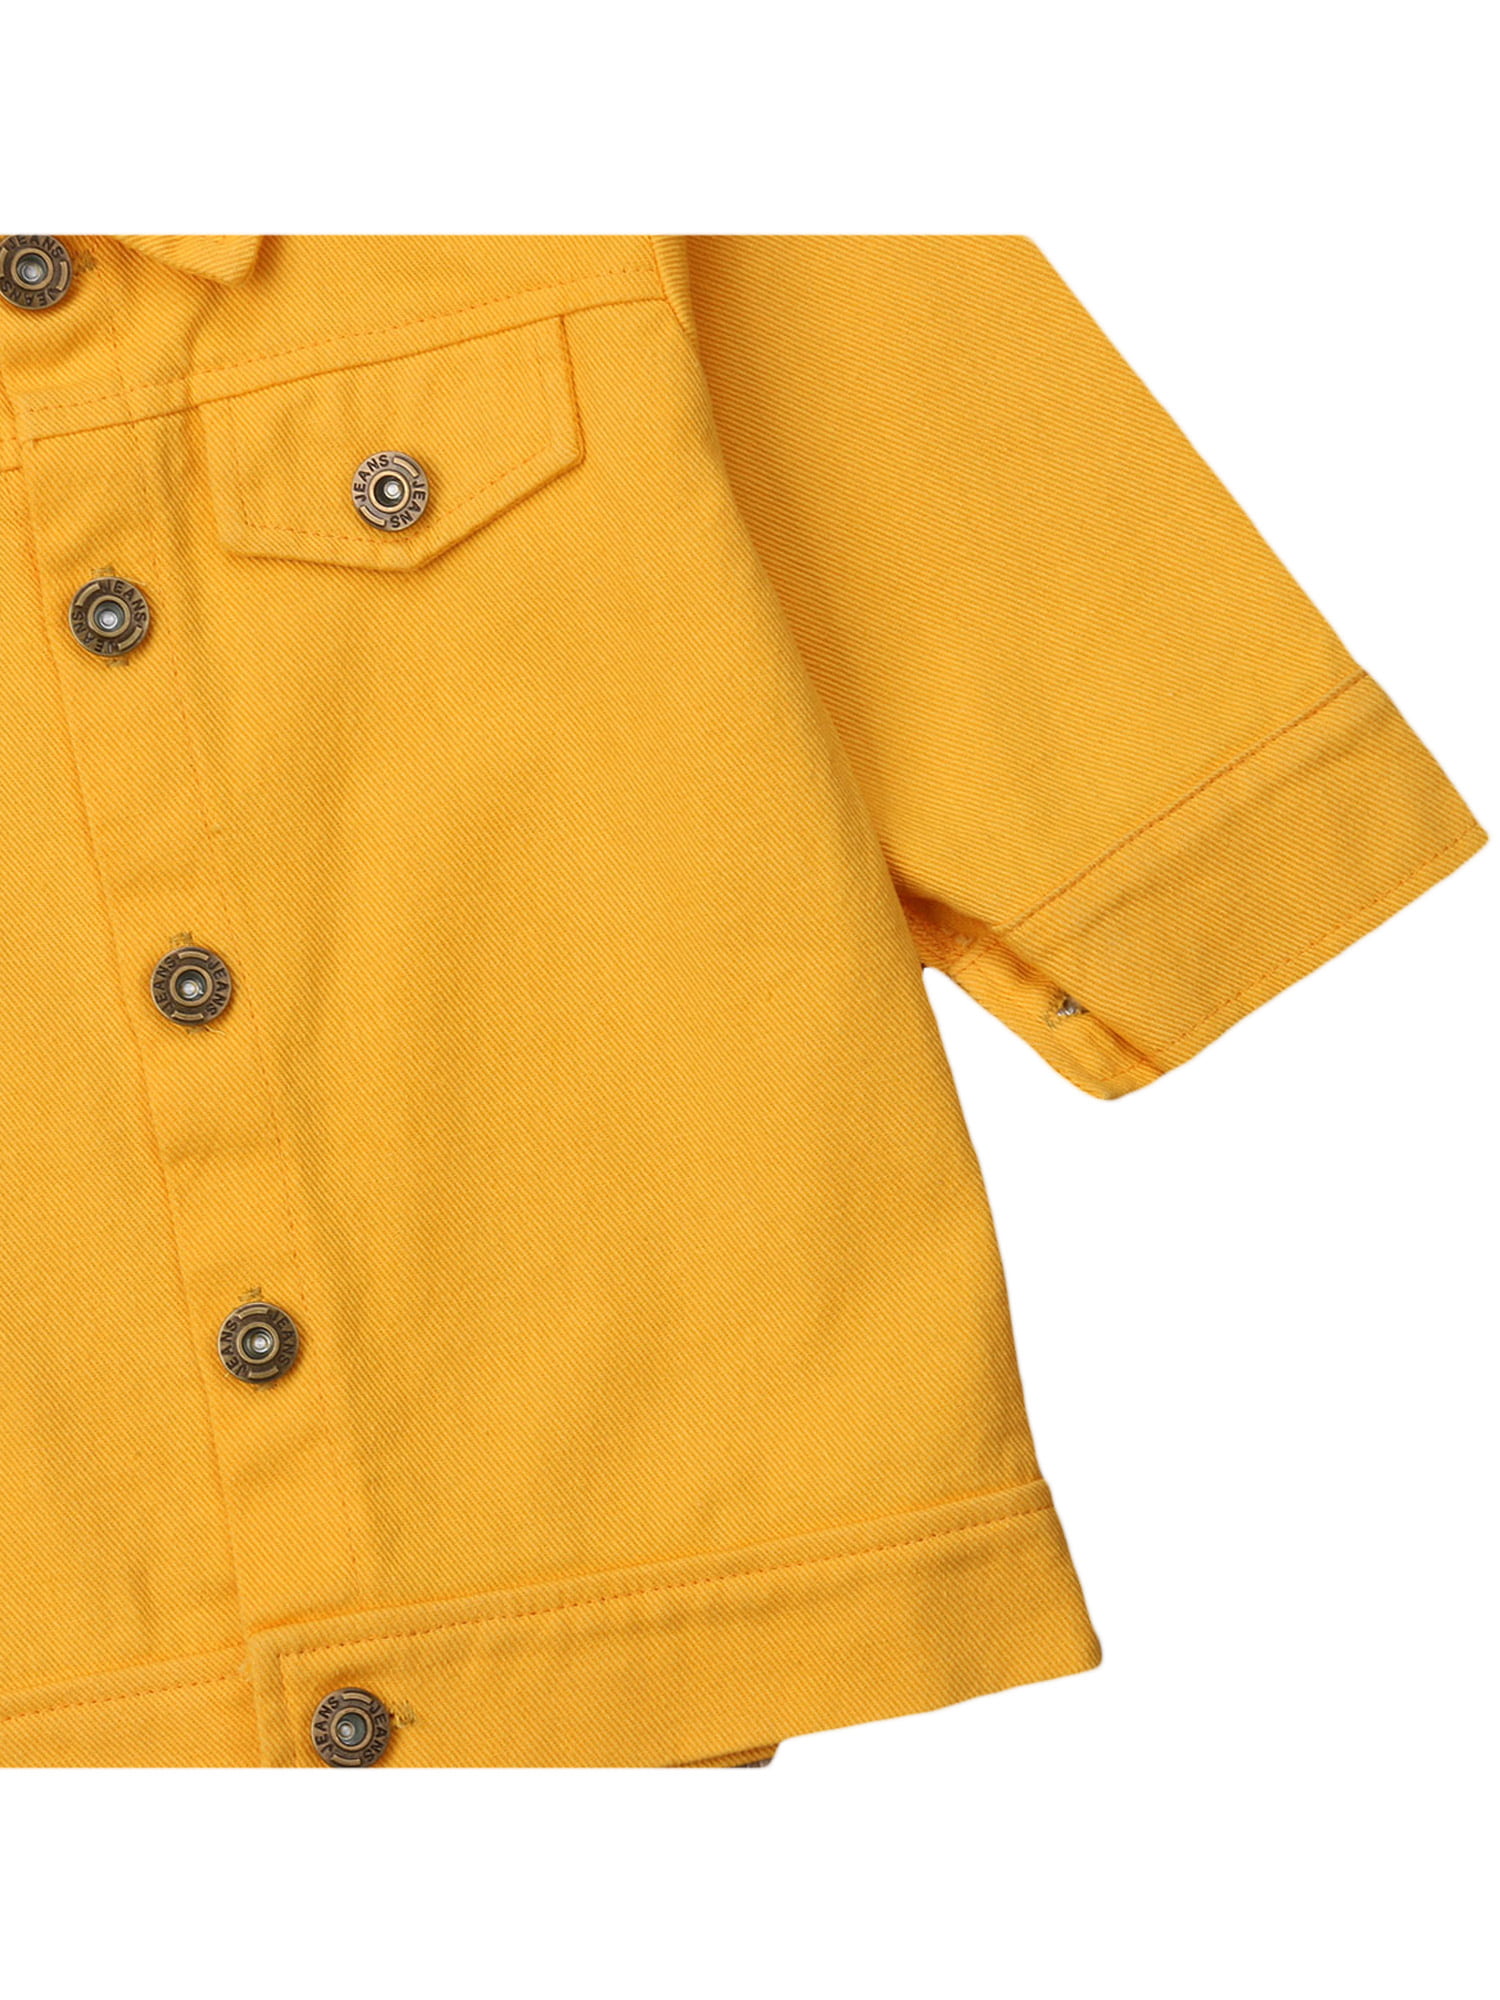 baby yellow denim jacket